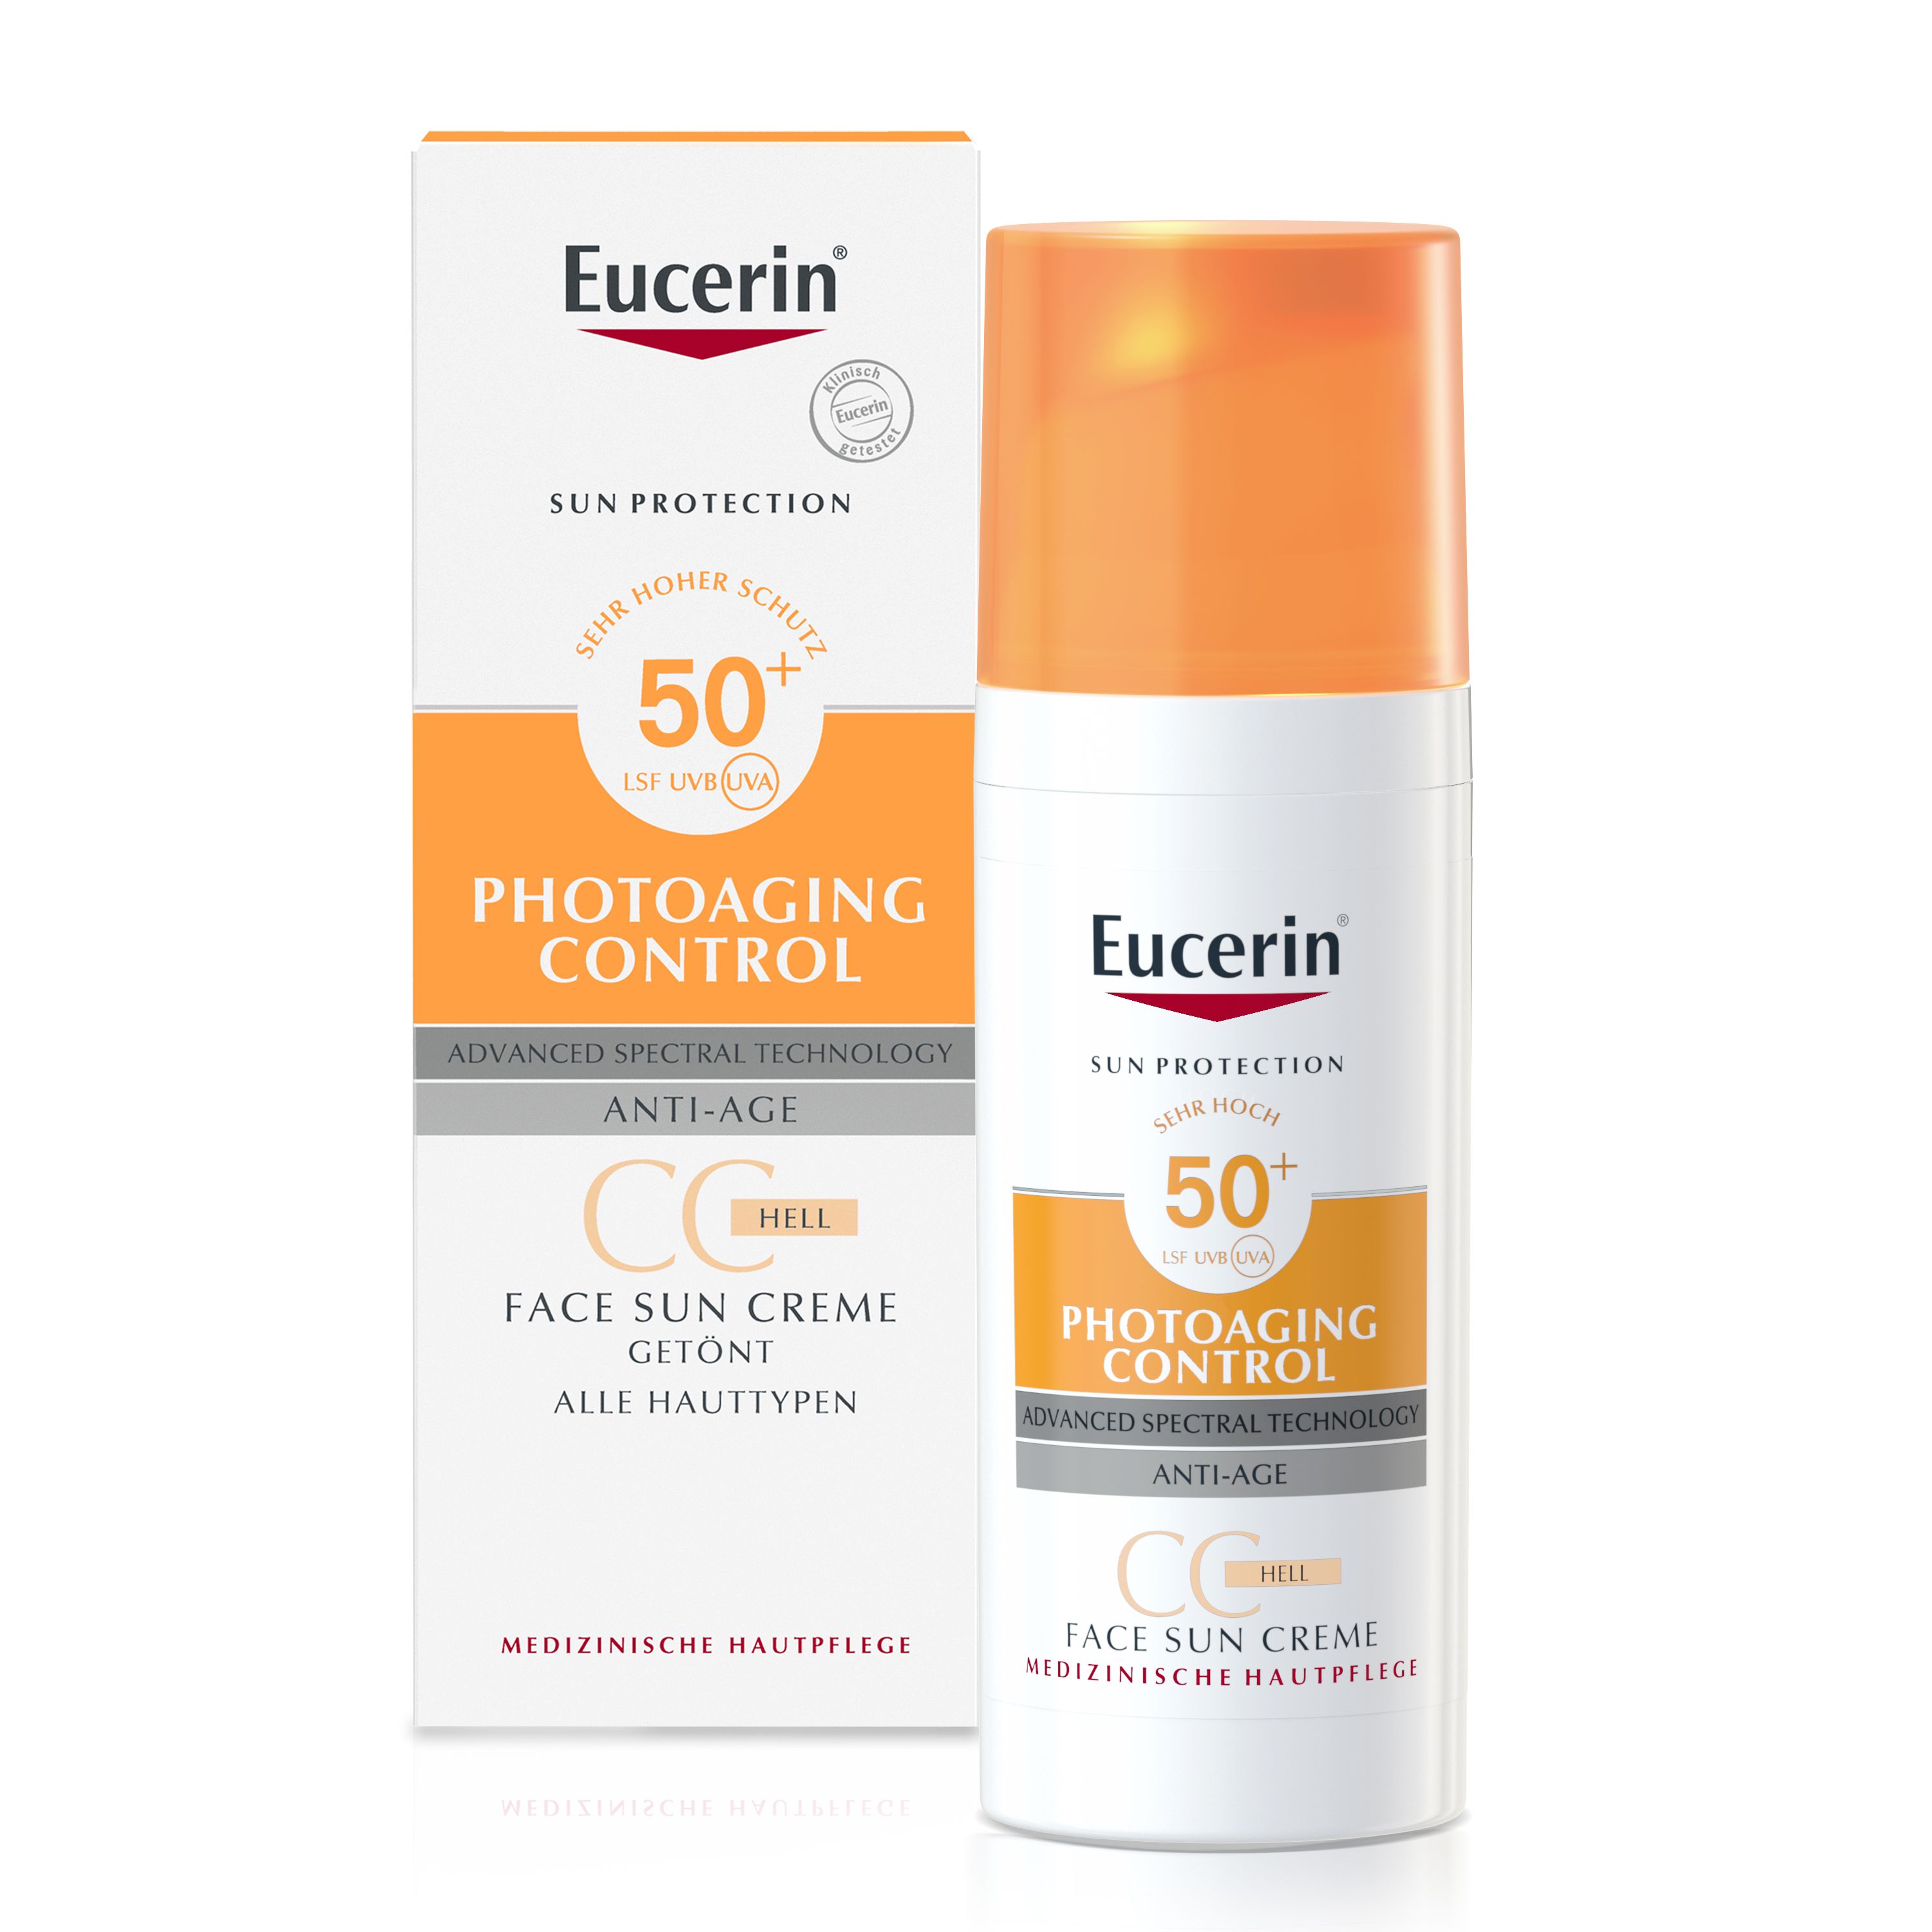 Eucerin® Photoaging Control Face Sun CC Creme getönt LSF 50+ hell